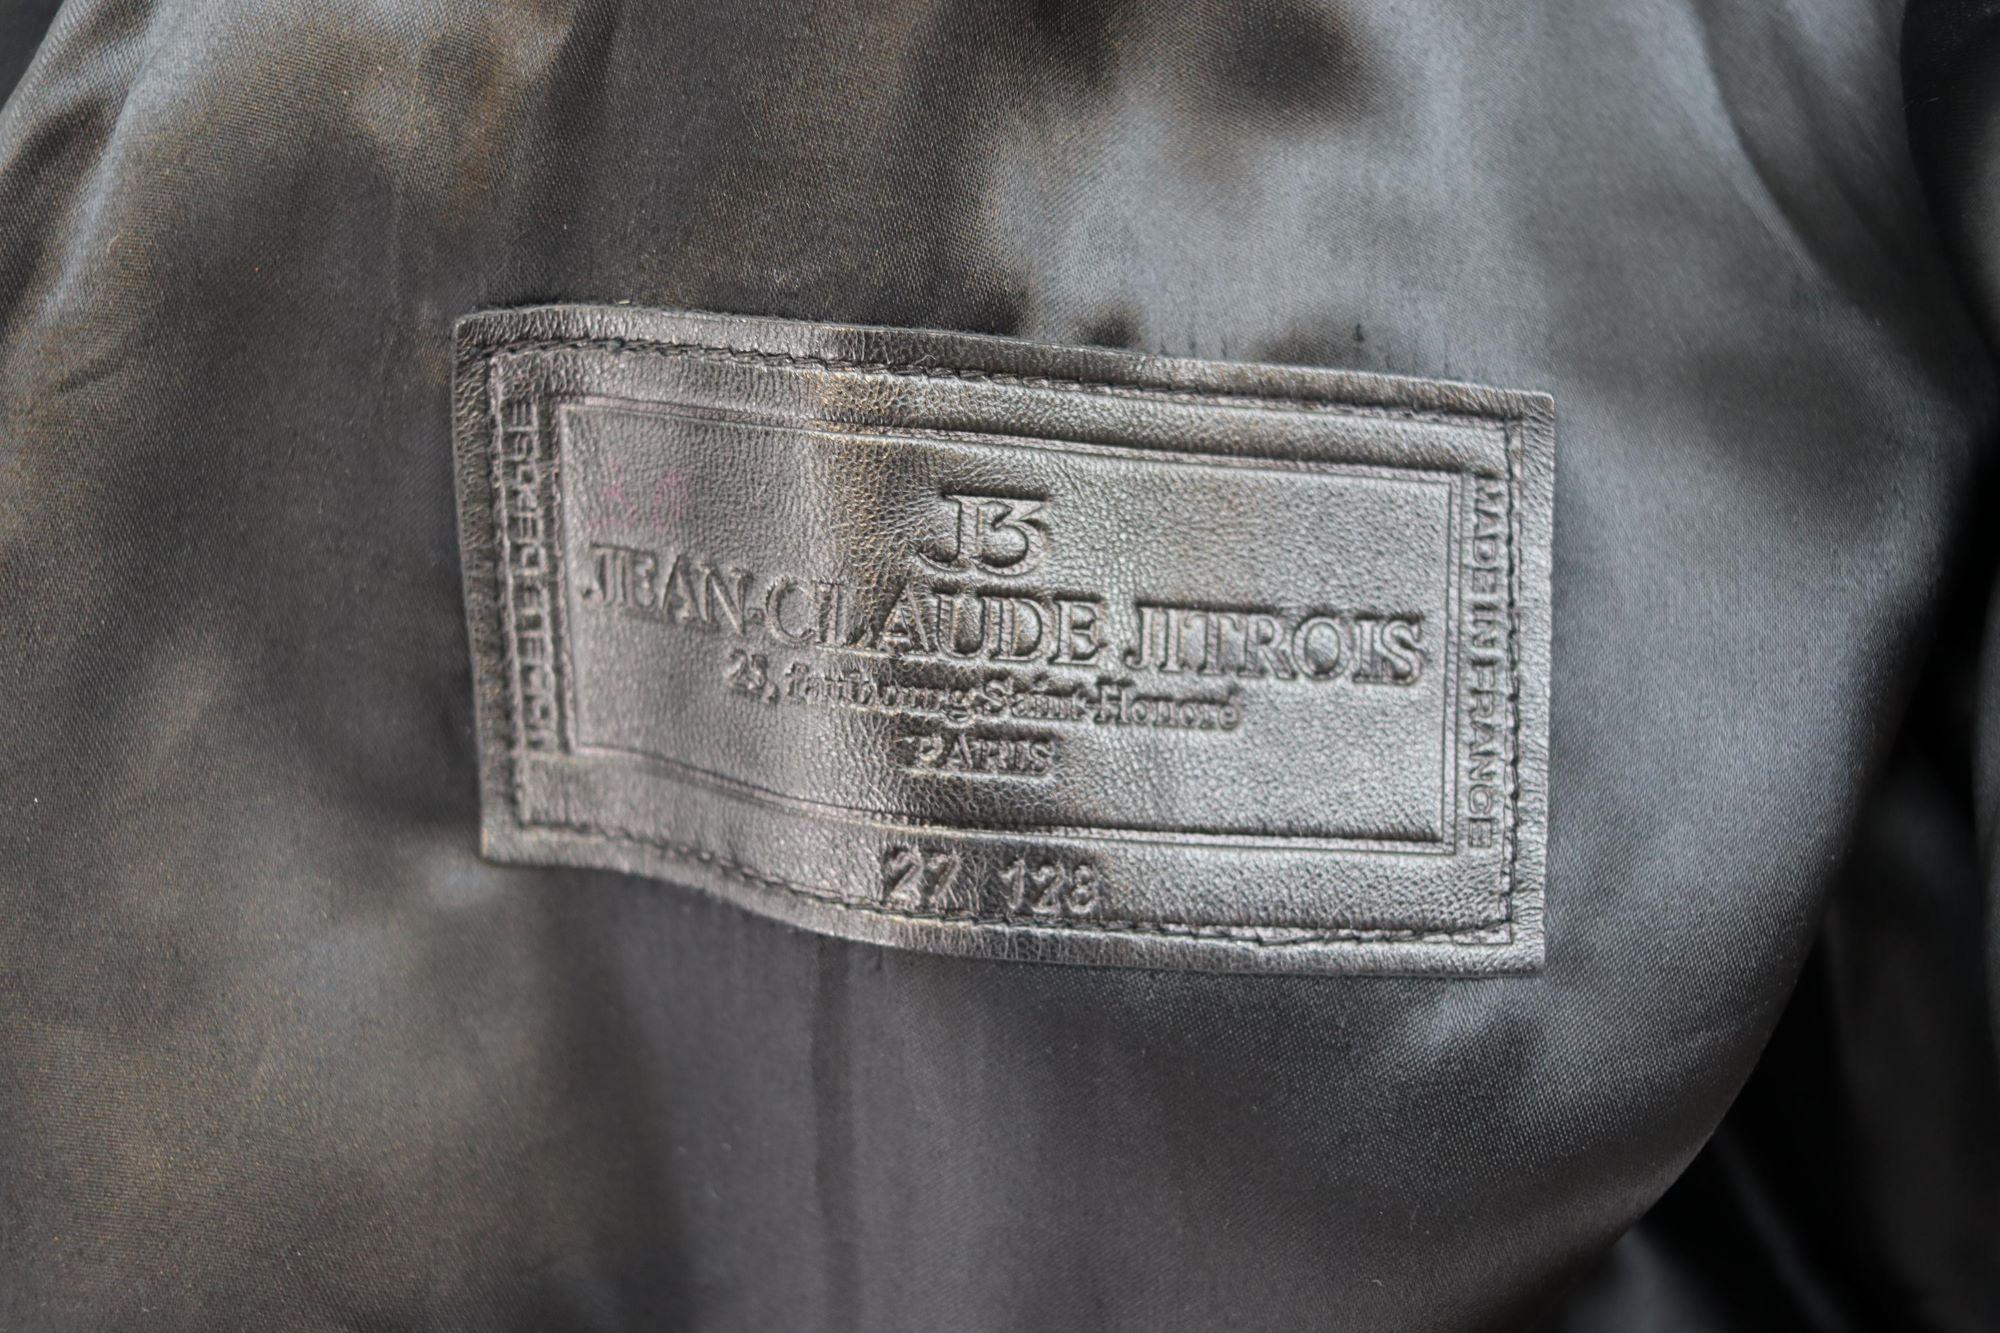 Jean Claude Jitrois Black Leather Jacket 1